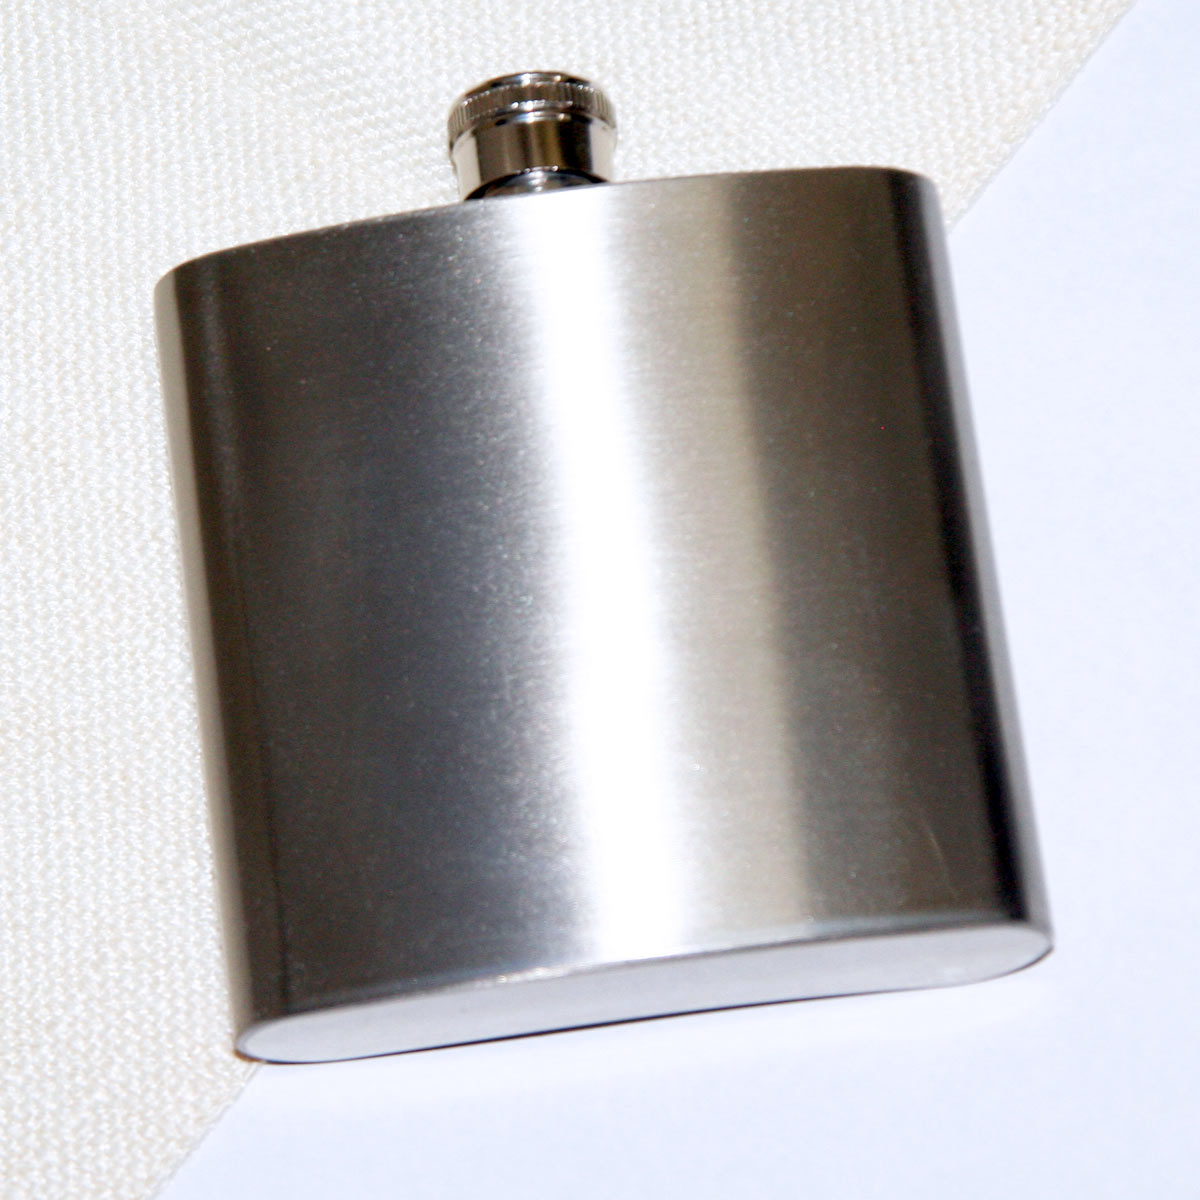 Metal flask for sublimation